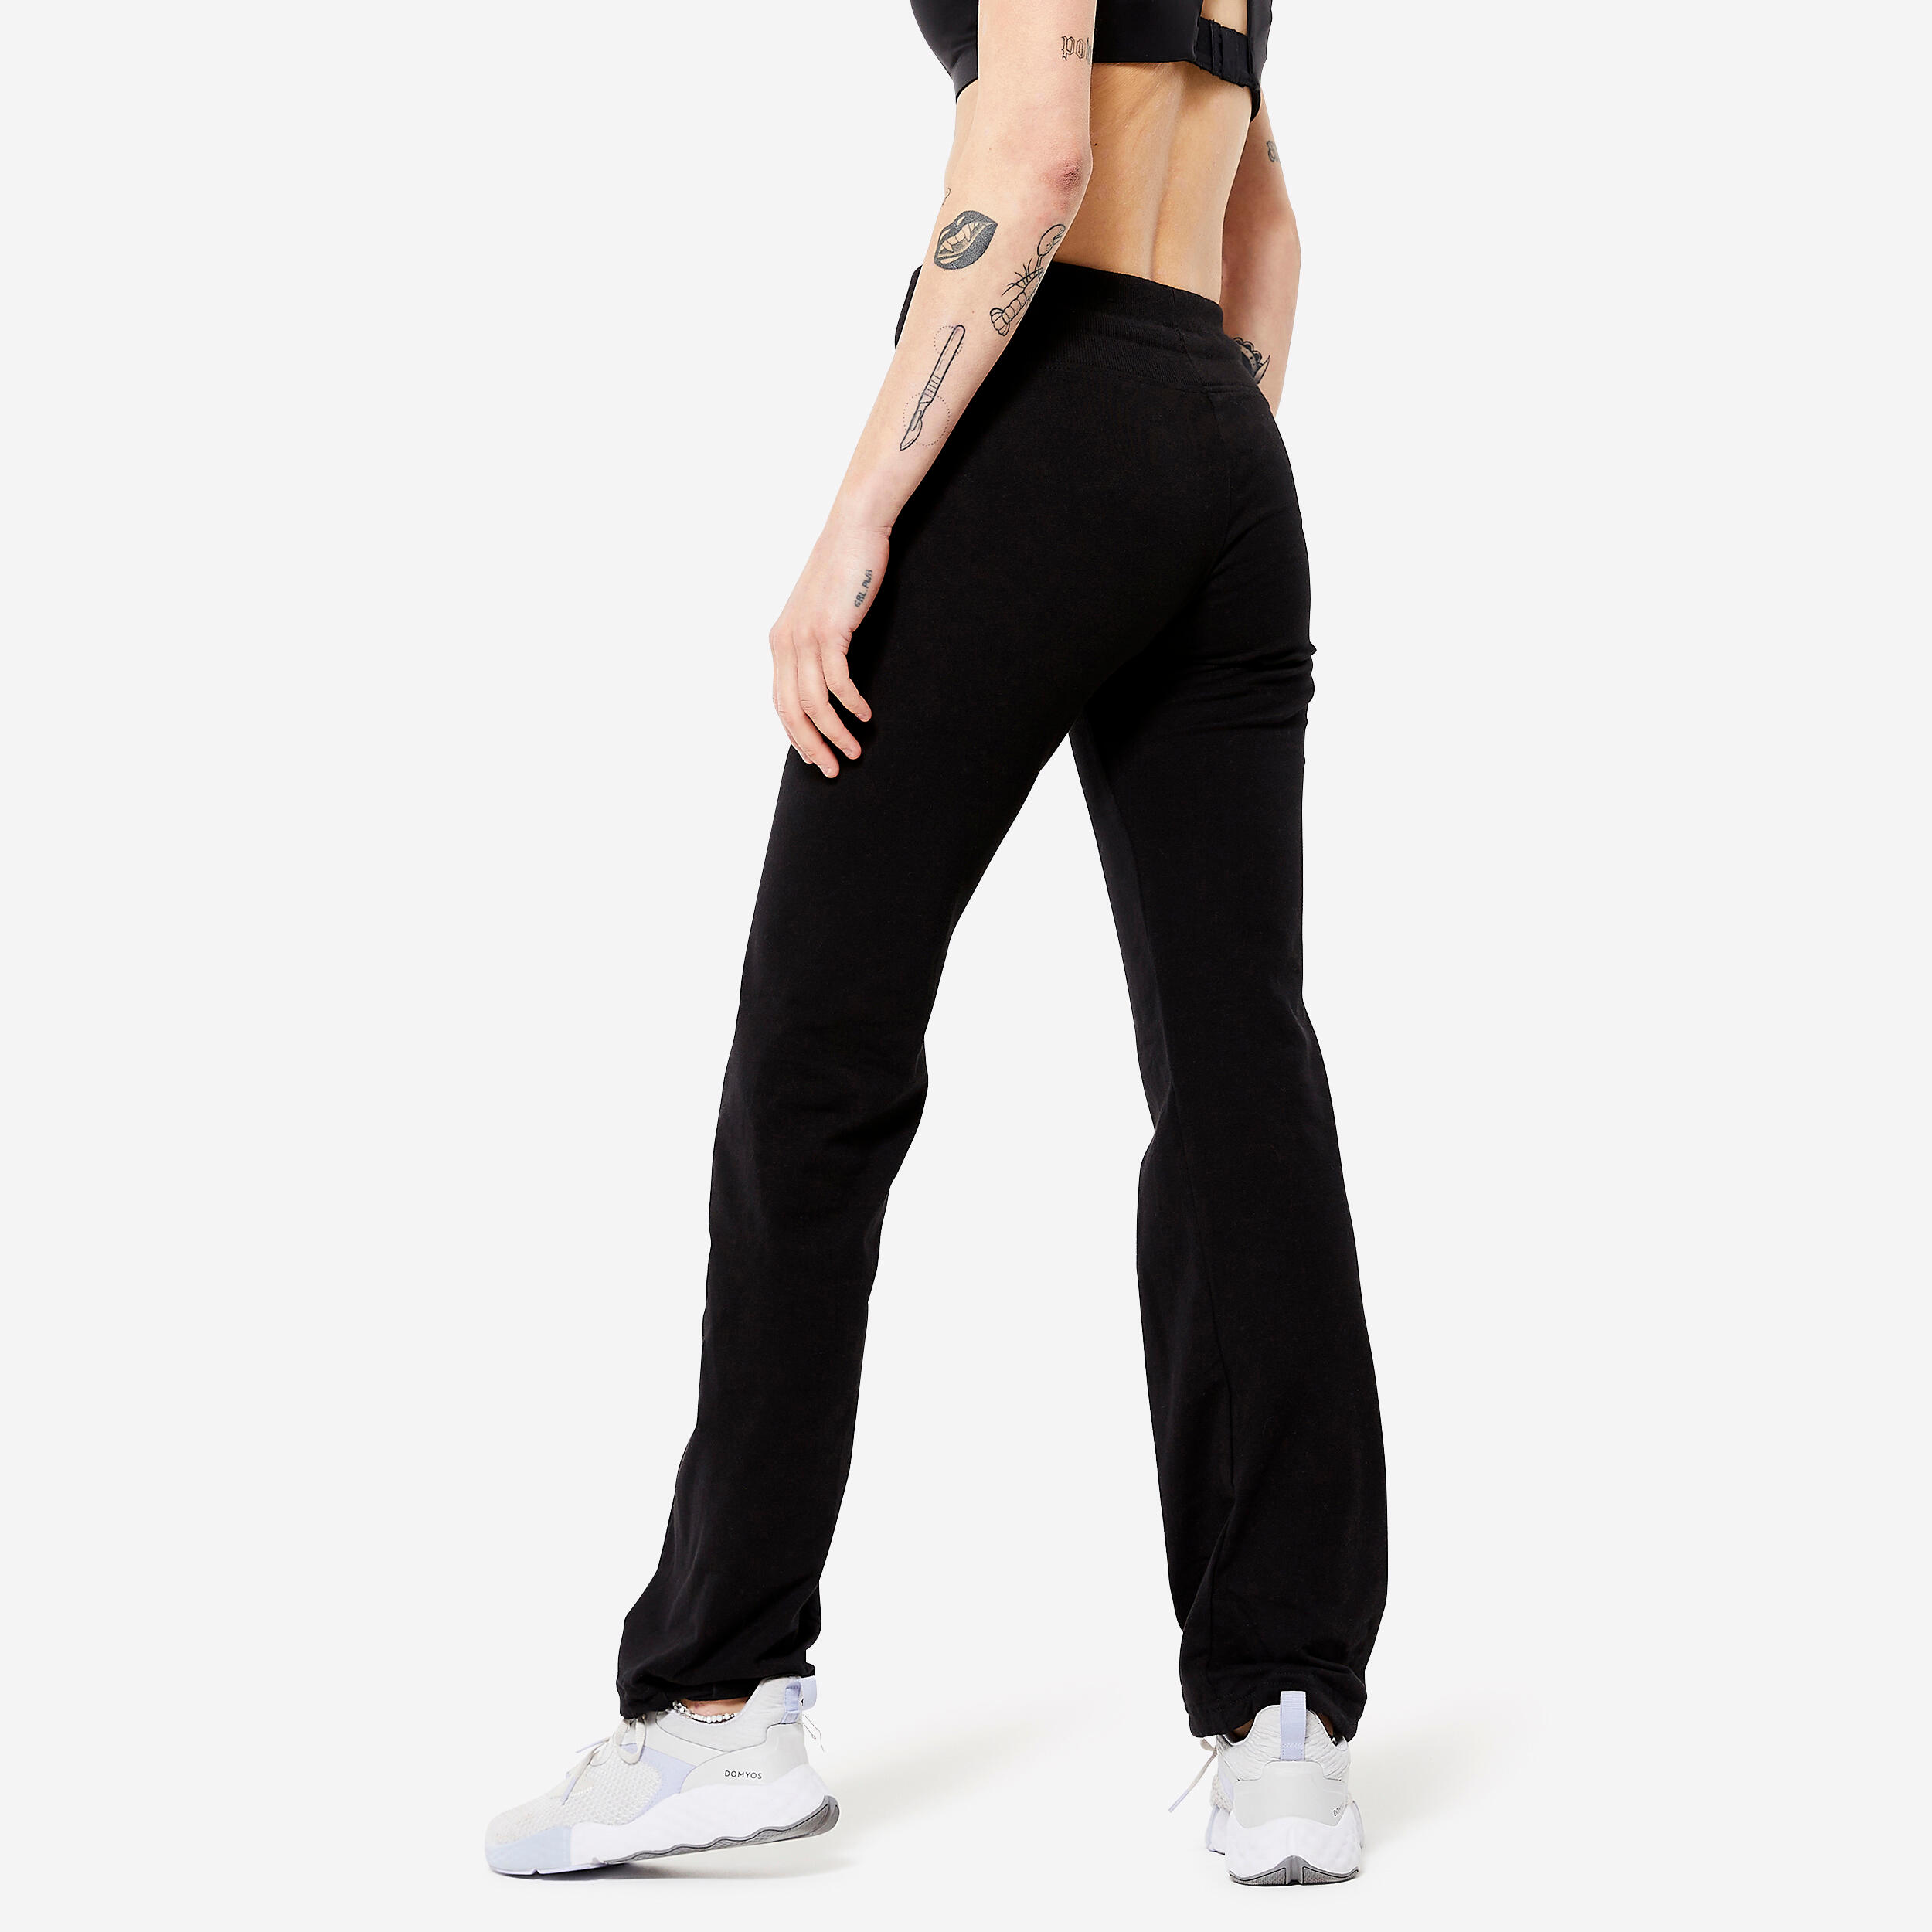 Women's Straight-Cut Fitness Leggings Fit+ 500 - Grey DOMYOS